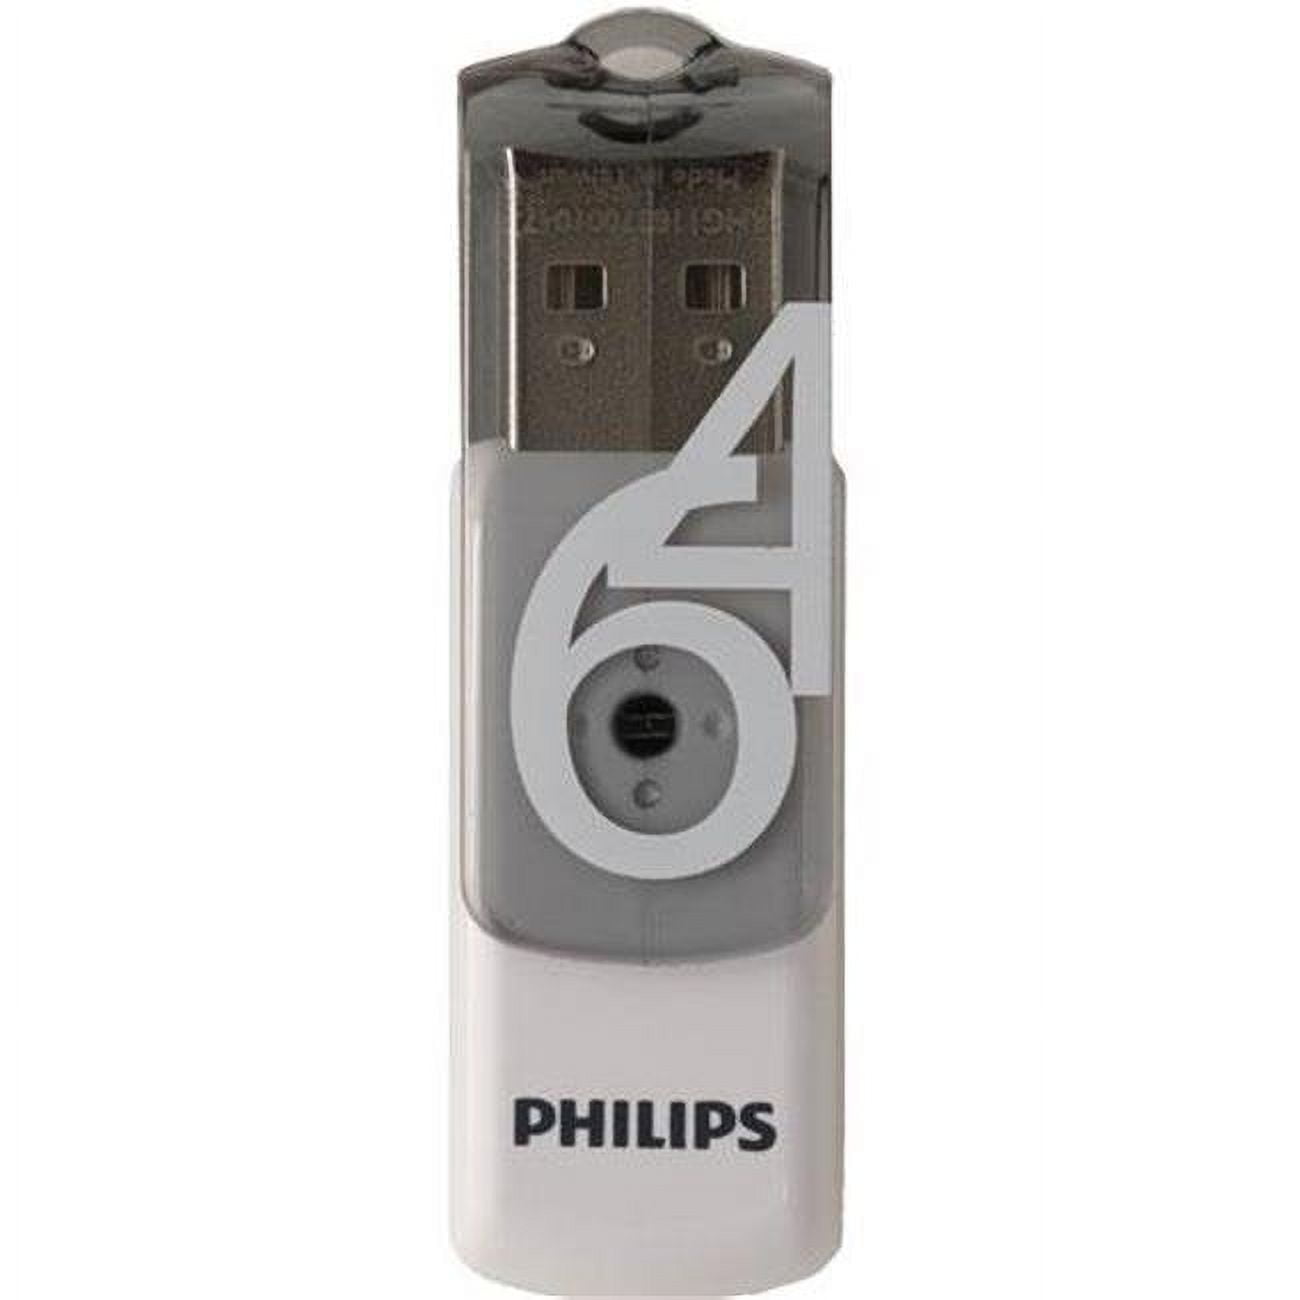 Philips PHMMD64GBVIVIDG 64GB USB 2.0 Vivid Edition Flash Drive - Grey